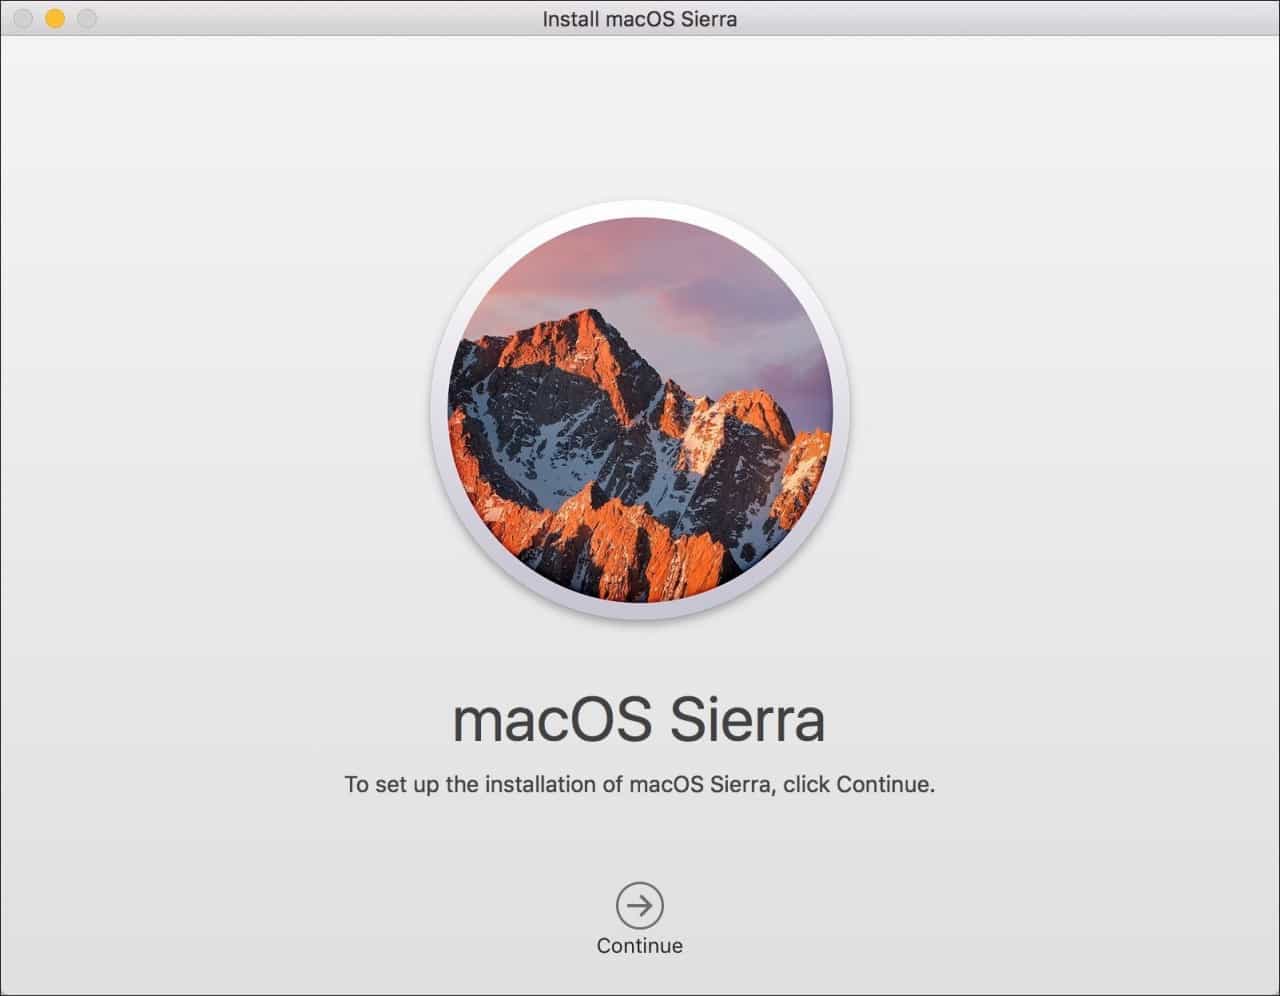 macos sierra full installer download